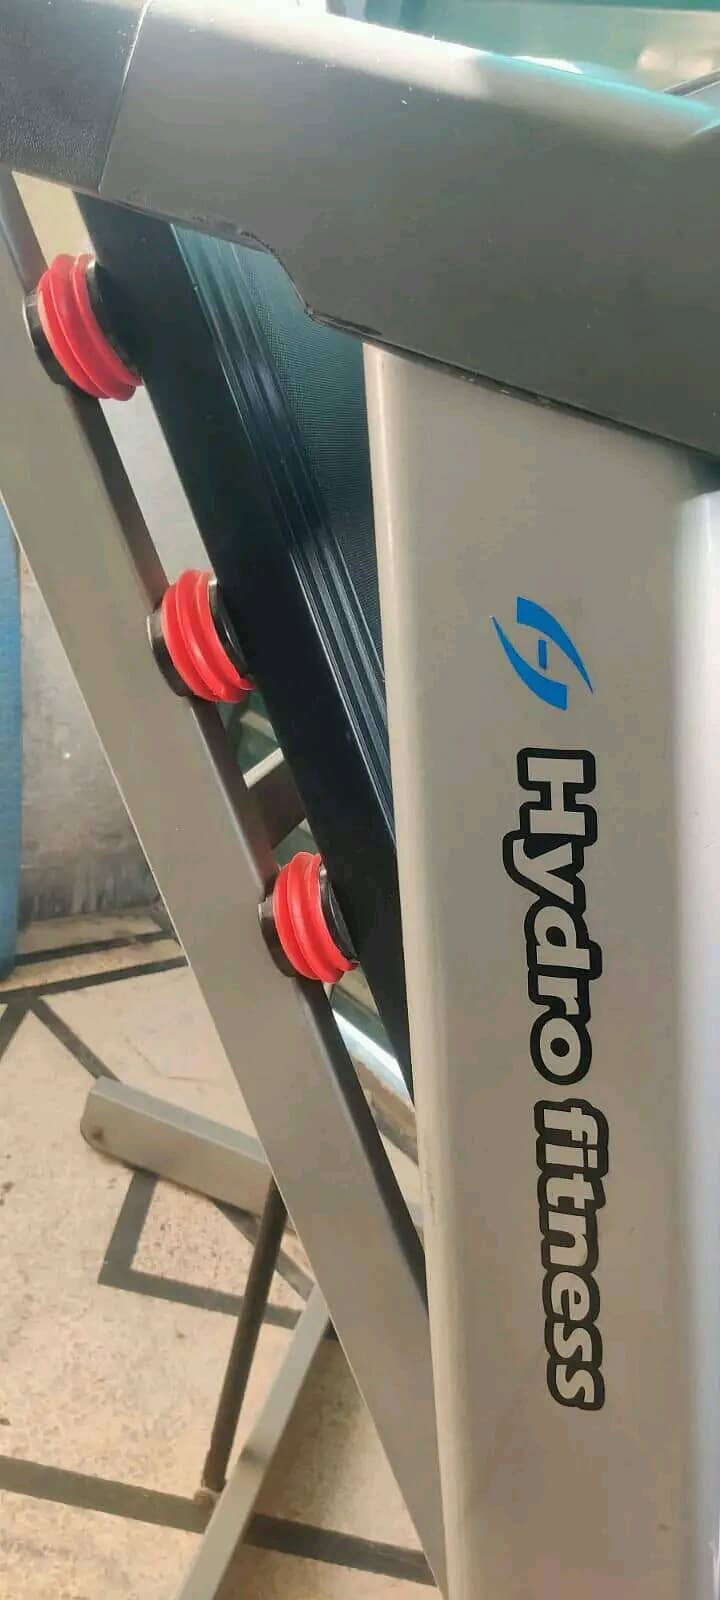 Hydro fitness treadmill for sale 0316/1736/128 whatsapp 3